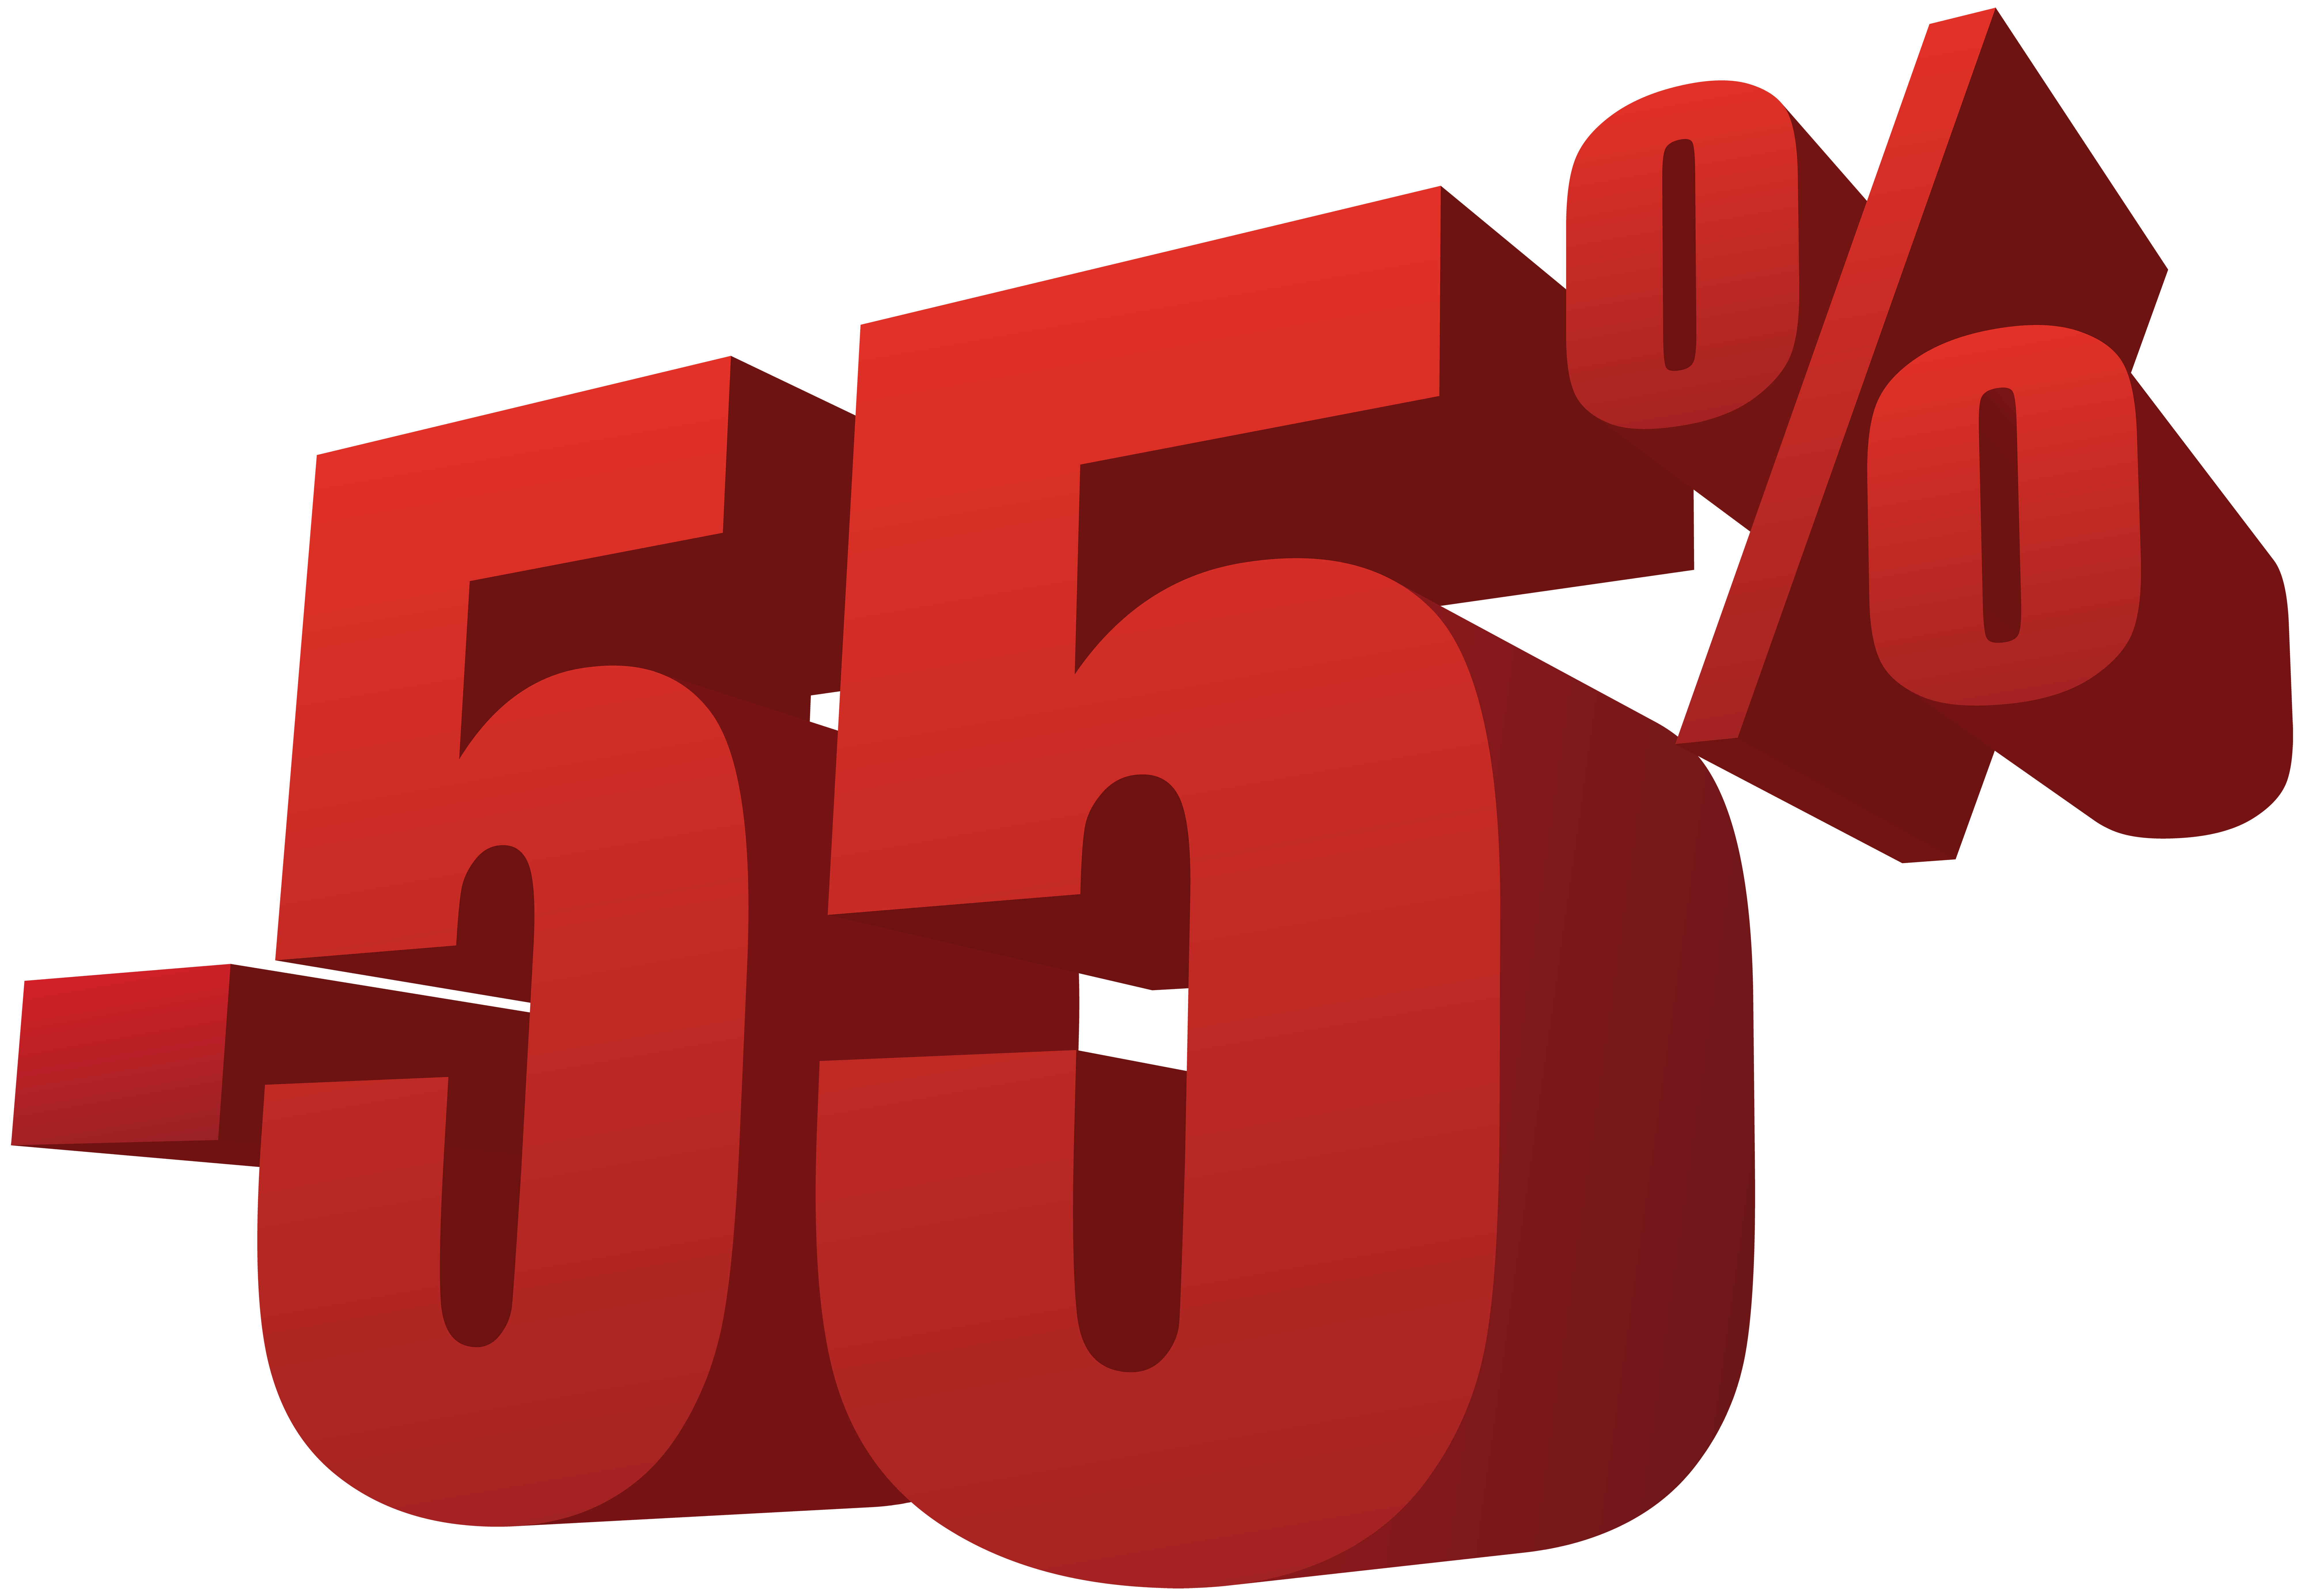 55% Off Sale PNG Transparent Image.